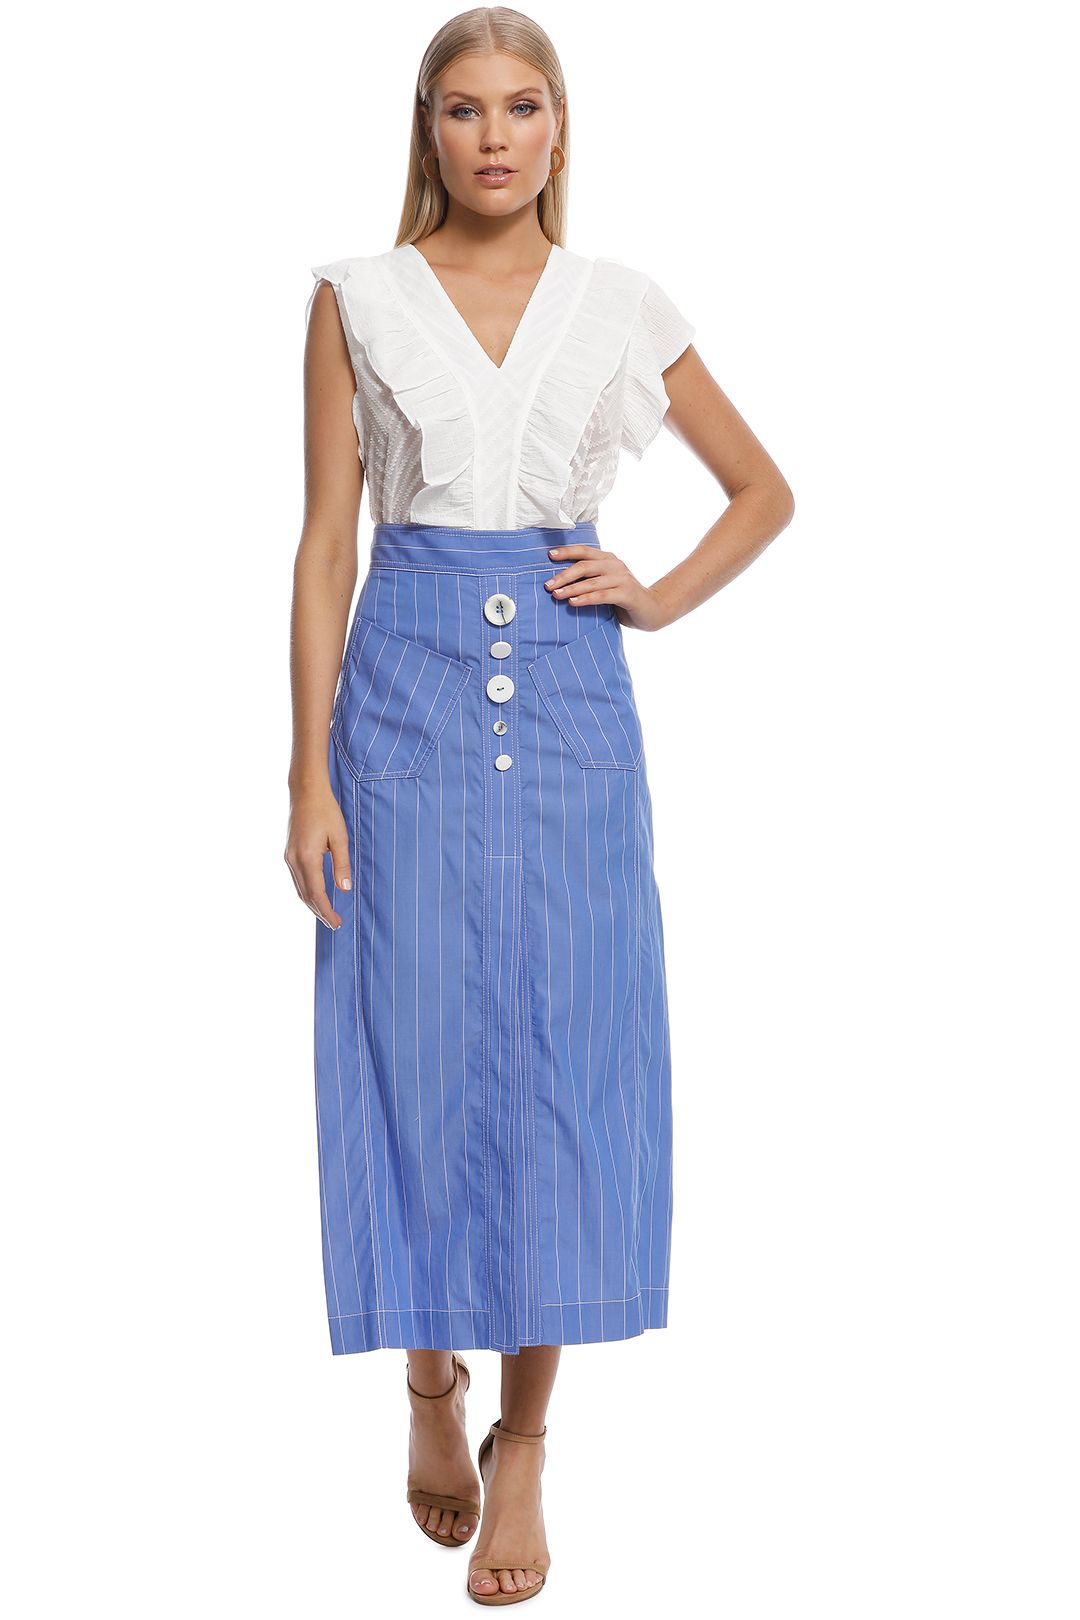 Ellery - Aggie A-Line Skirt - Blue - Front